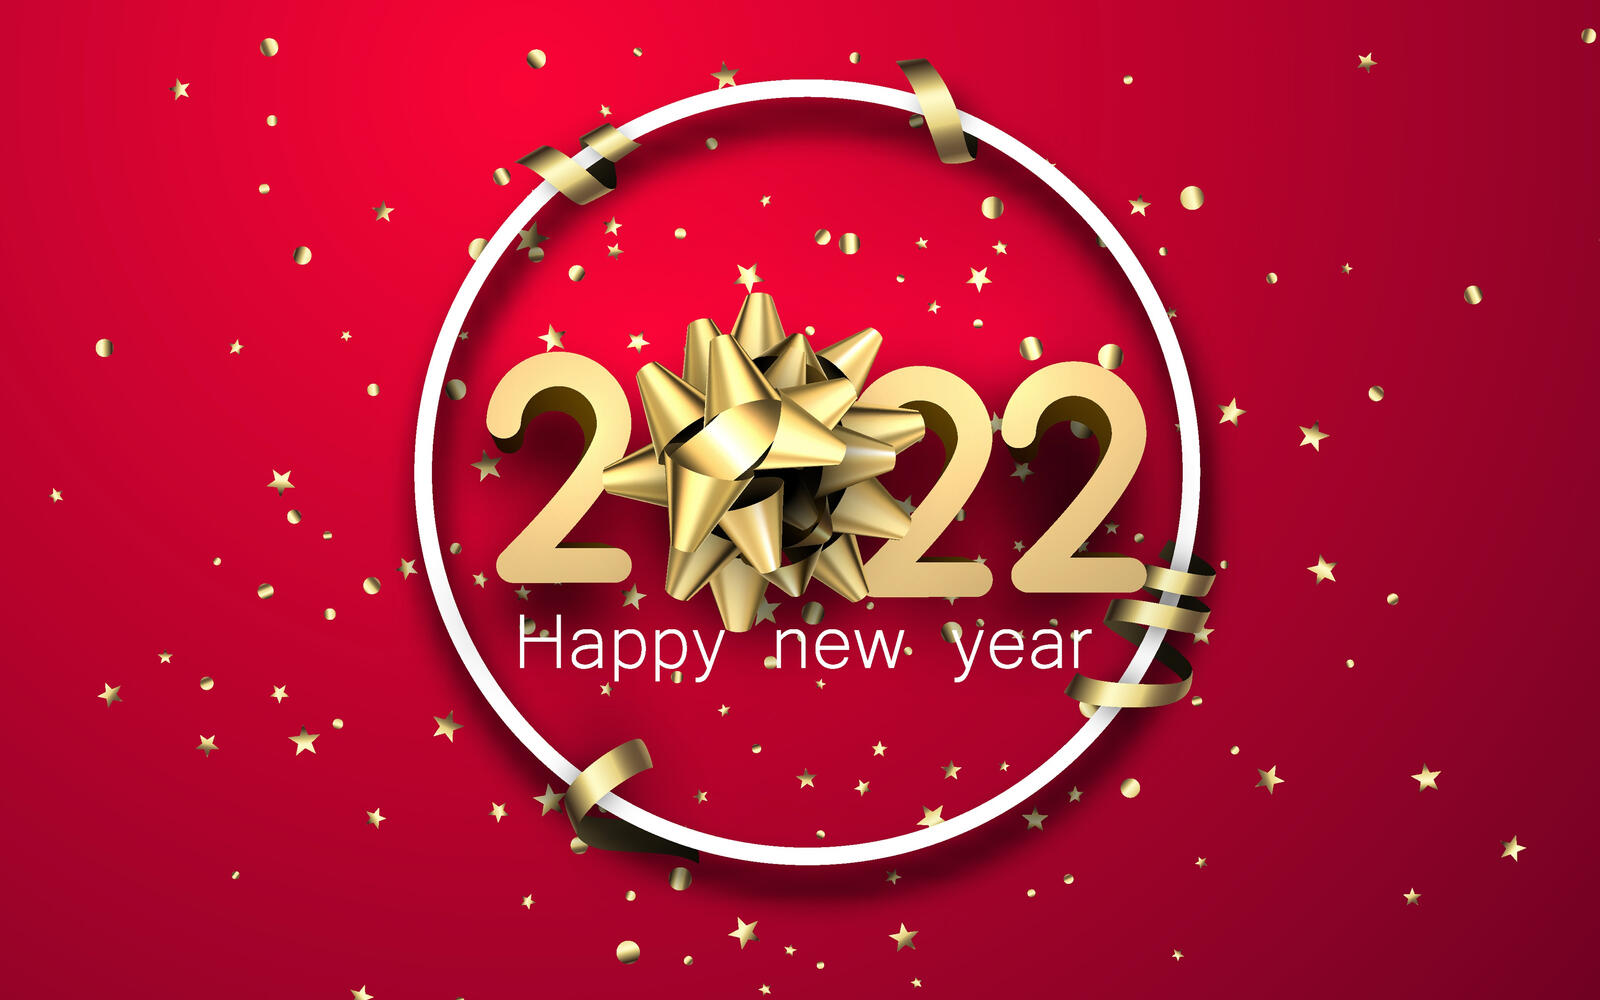 Wallpapers digital art wallpaper happy new year 2022 merry christmas 2022 on the desktop